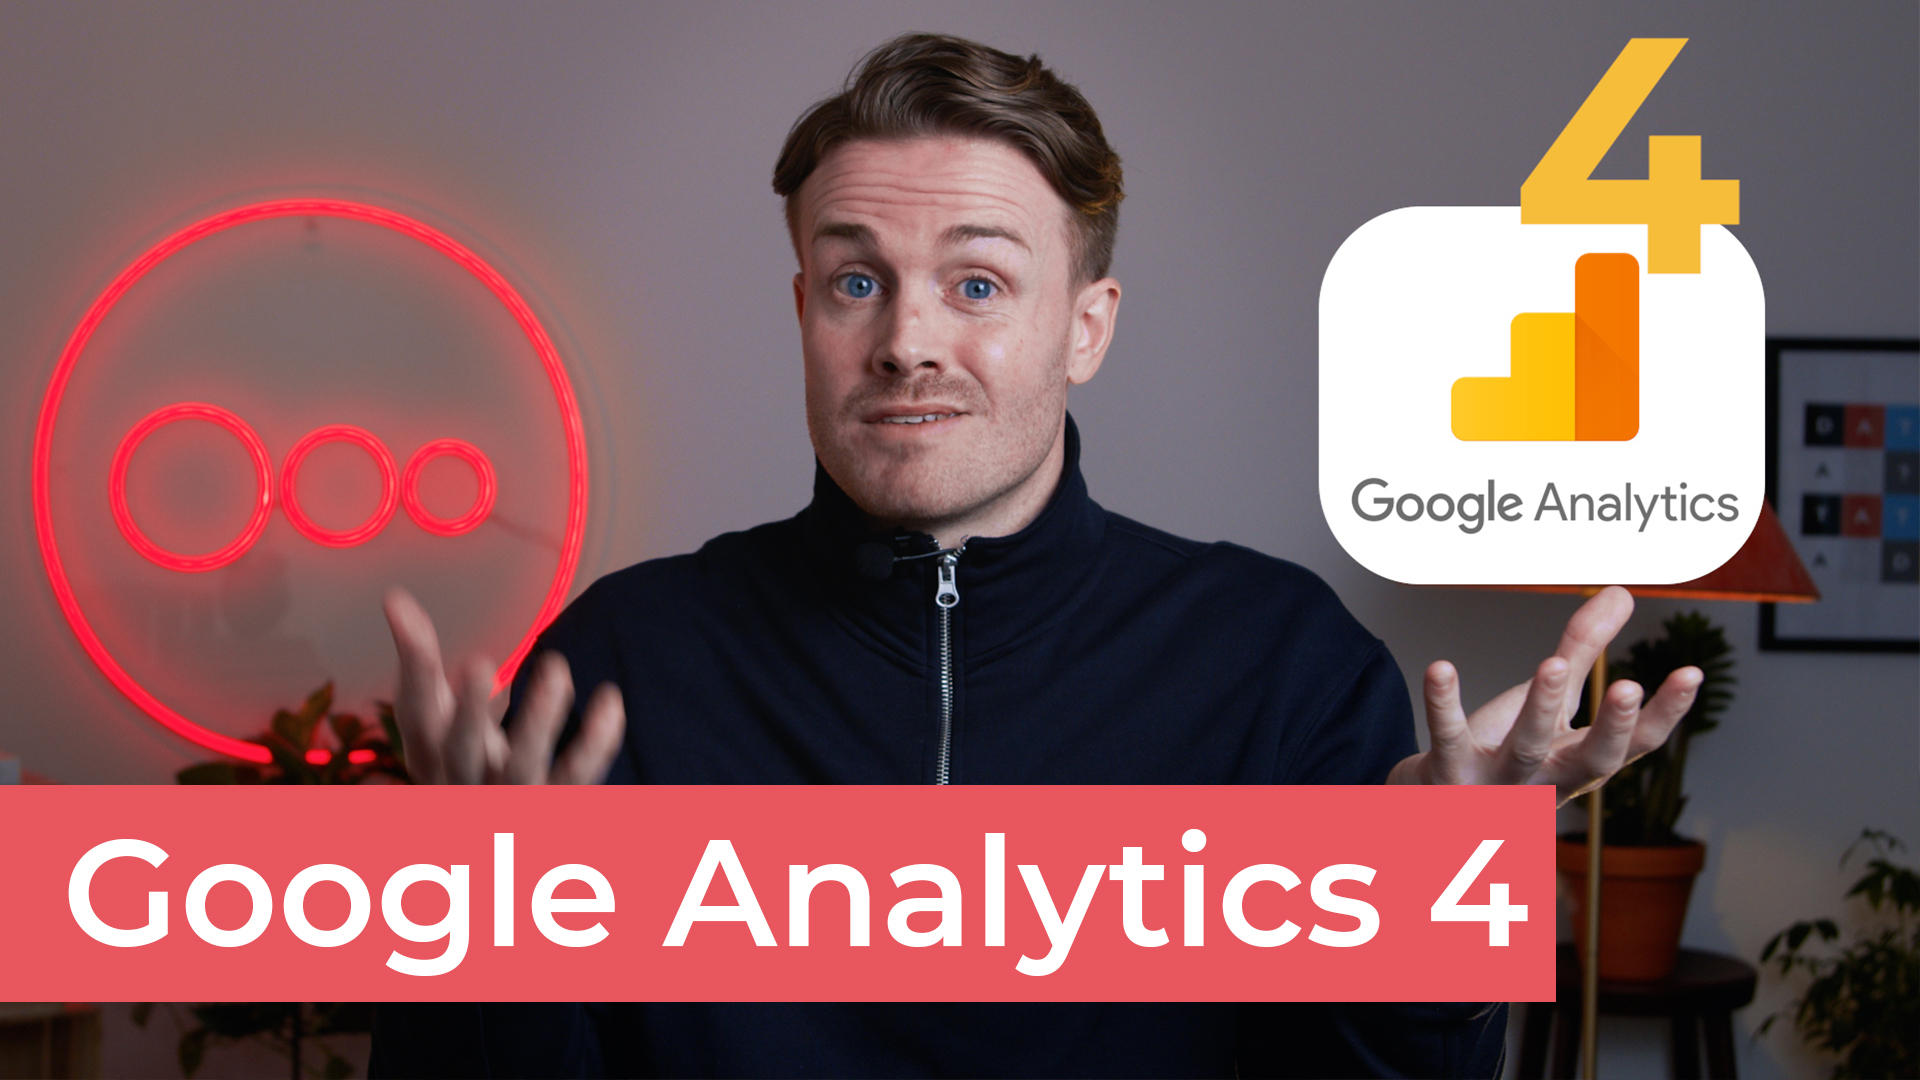 The benefits of Google Analytics 4